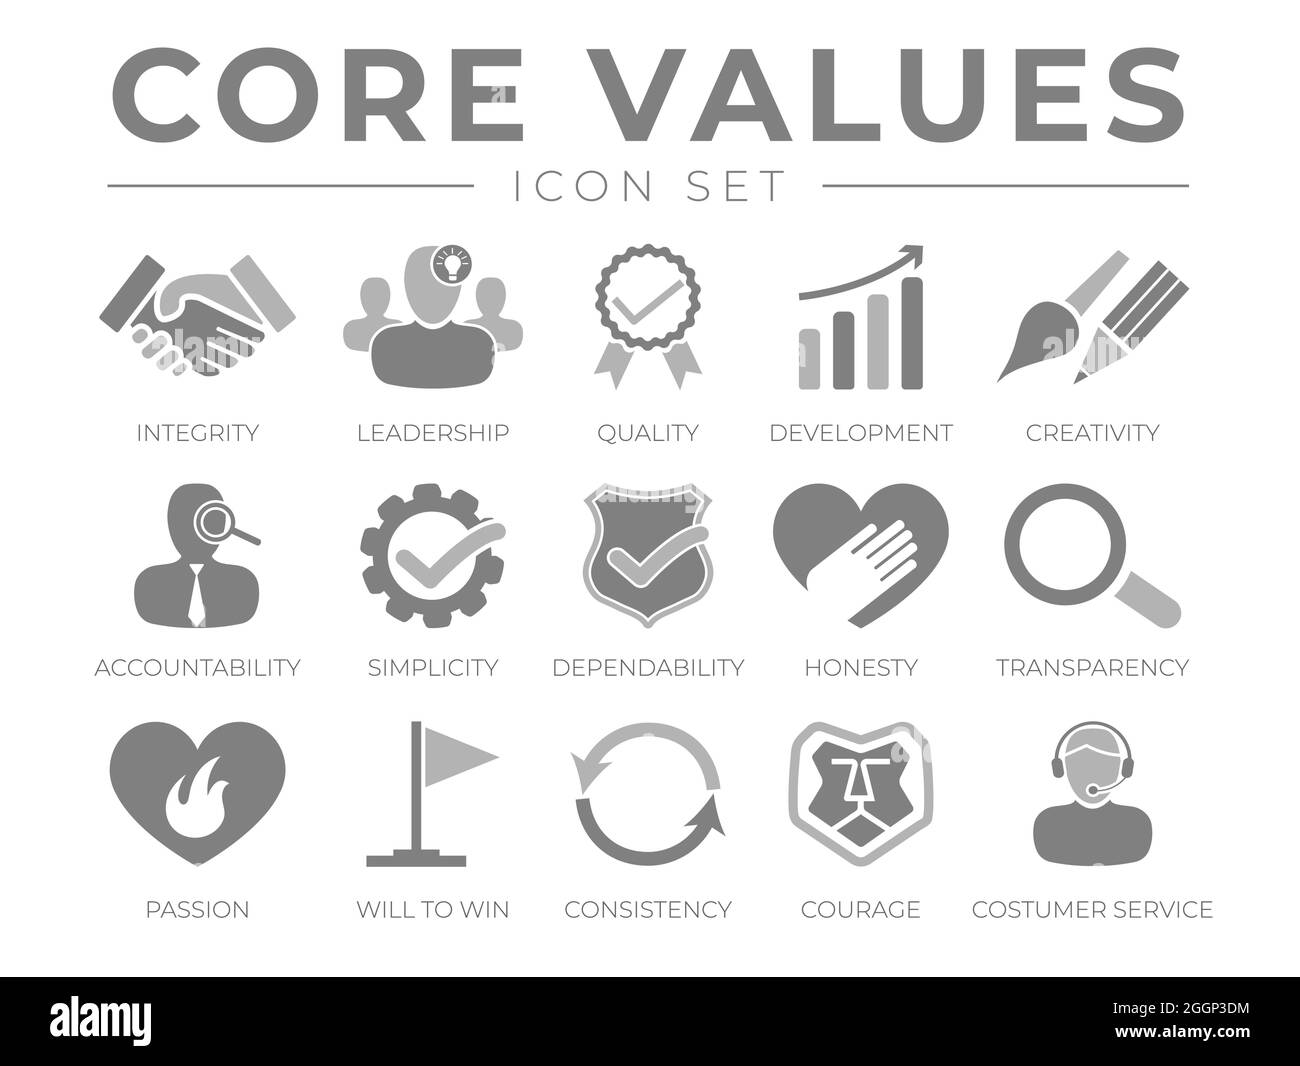 Company Core Values Icon Set. Integrity, Leadership, Quality and Development, Creativity, Accountability, Simplicity, Dependability, Honesty, Transpar Stock Vector